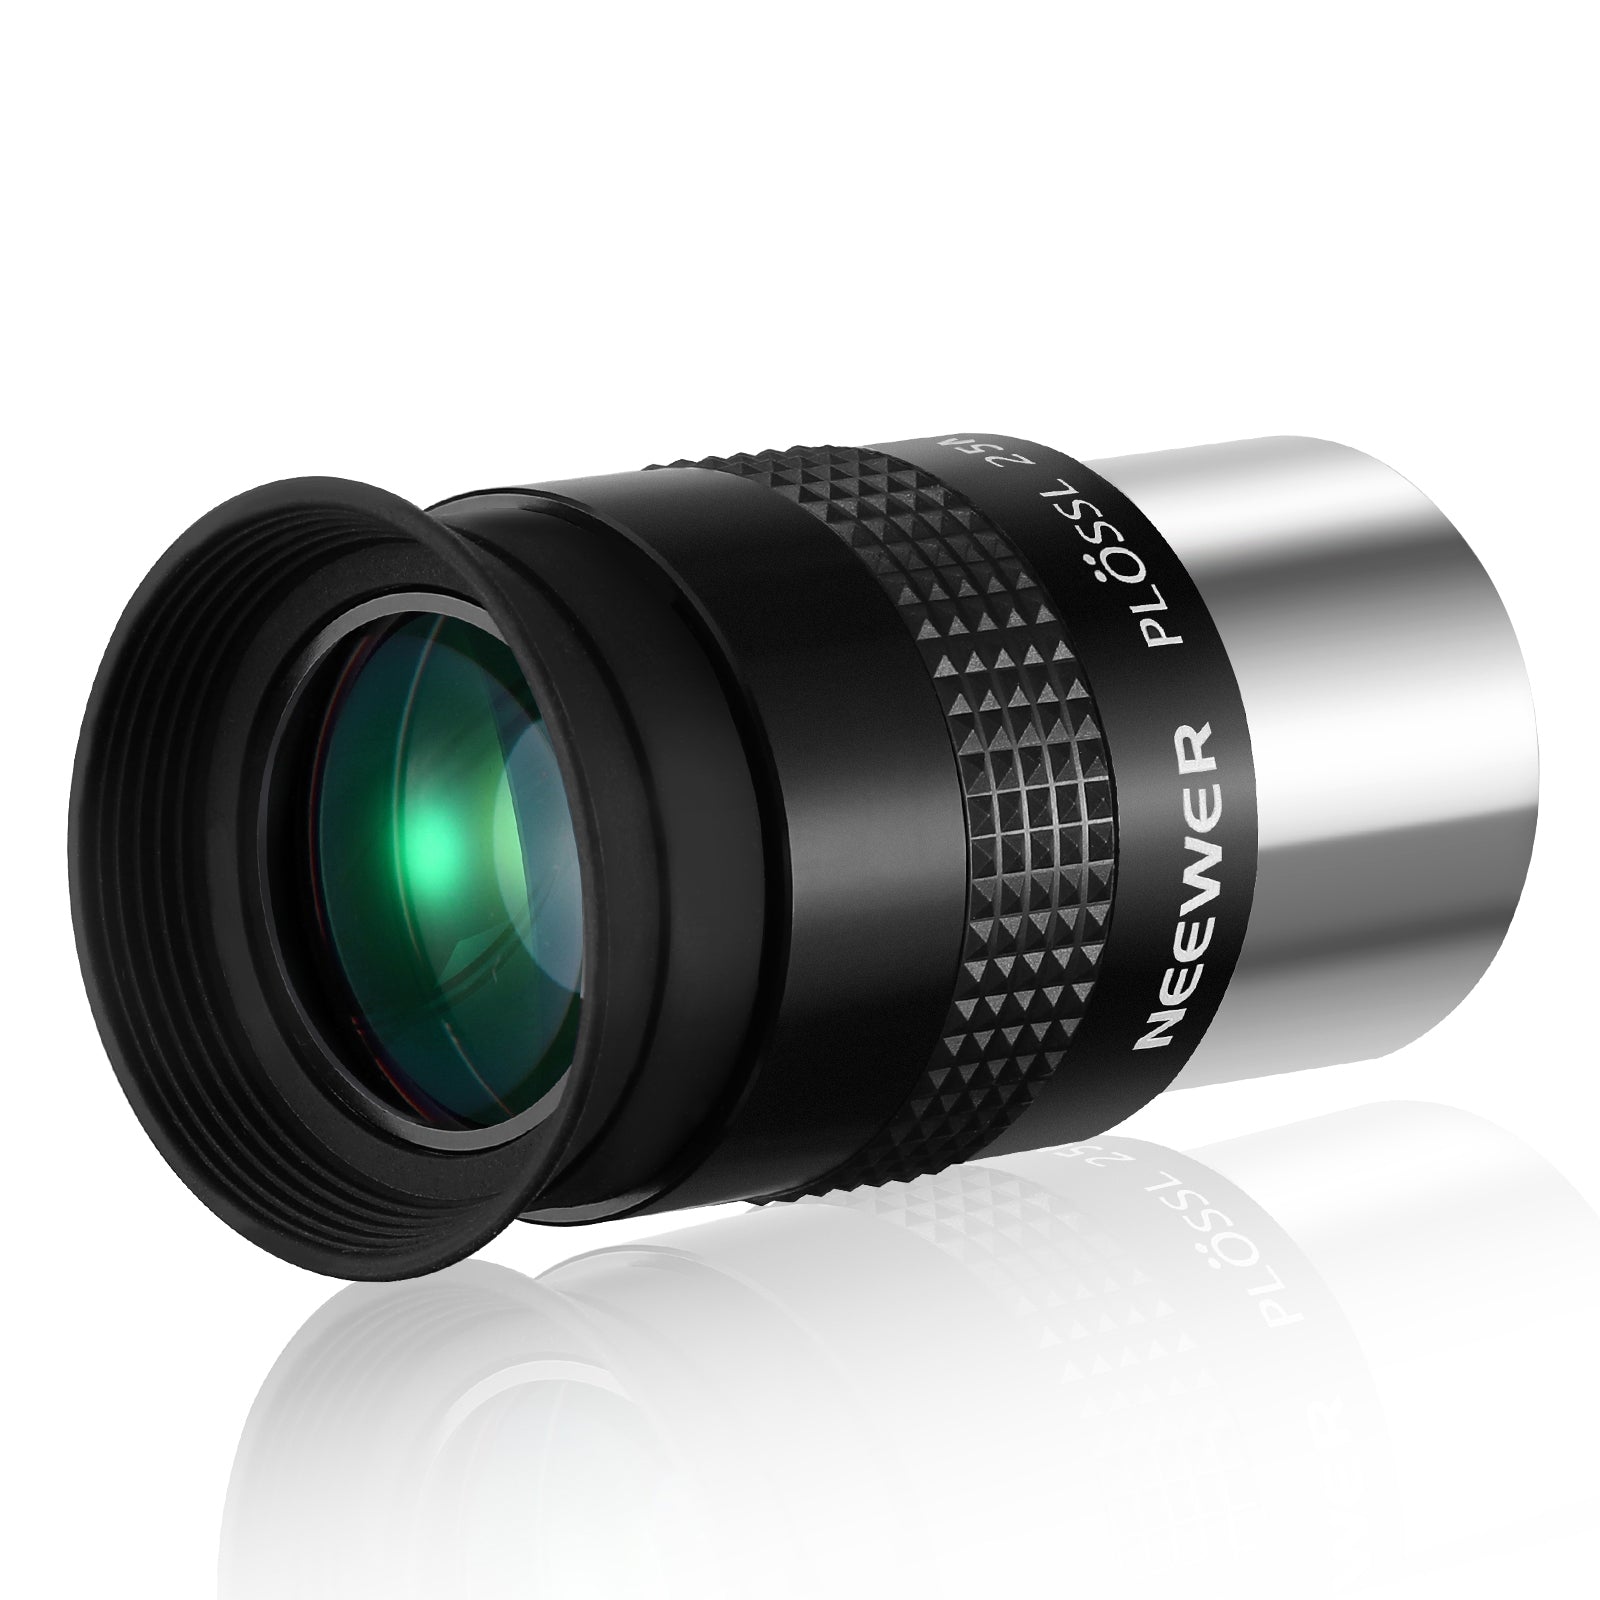 Neewer Telescope Lens 25mm Eyepiece Lens